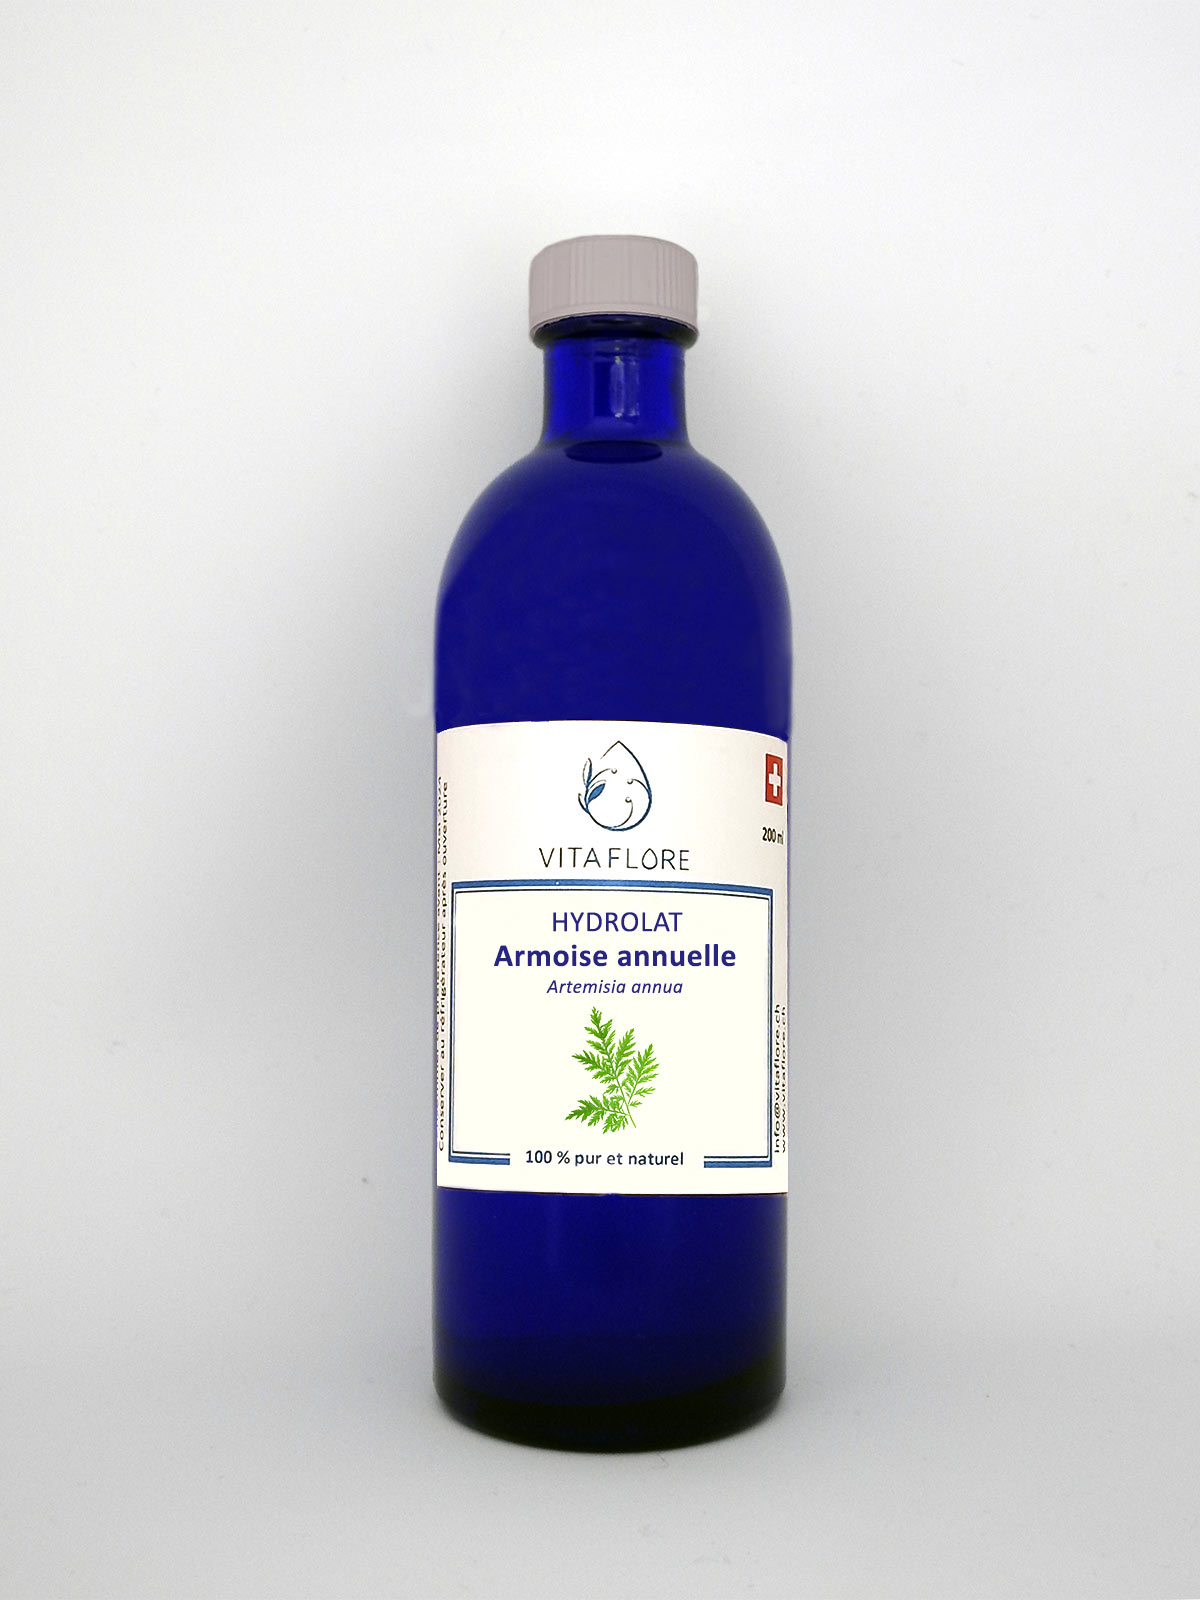 Hydrolat d'artemisia annua - Vitaflore Hydrolat d'armoise annuelle - Vitaflore